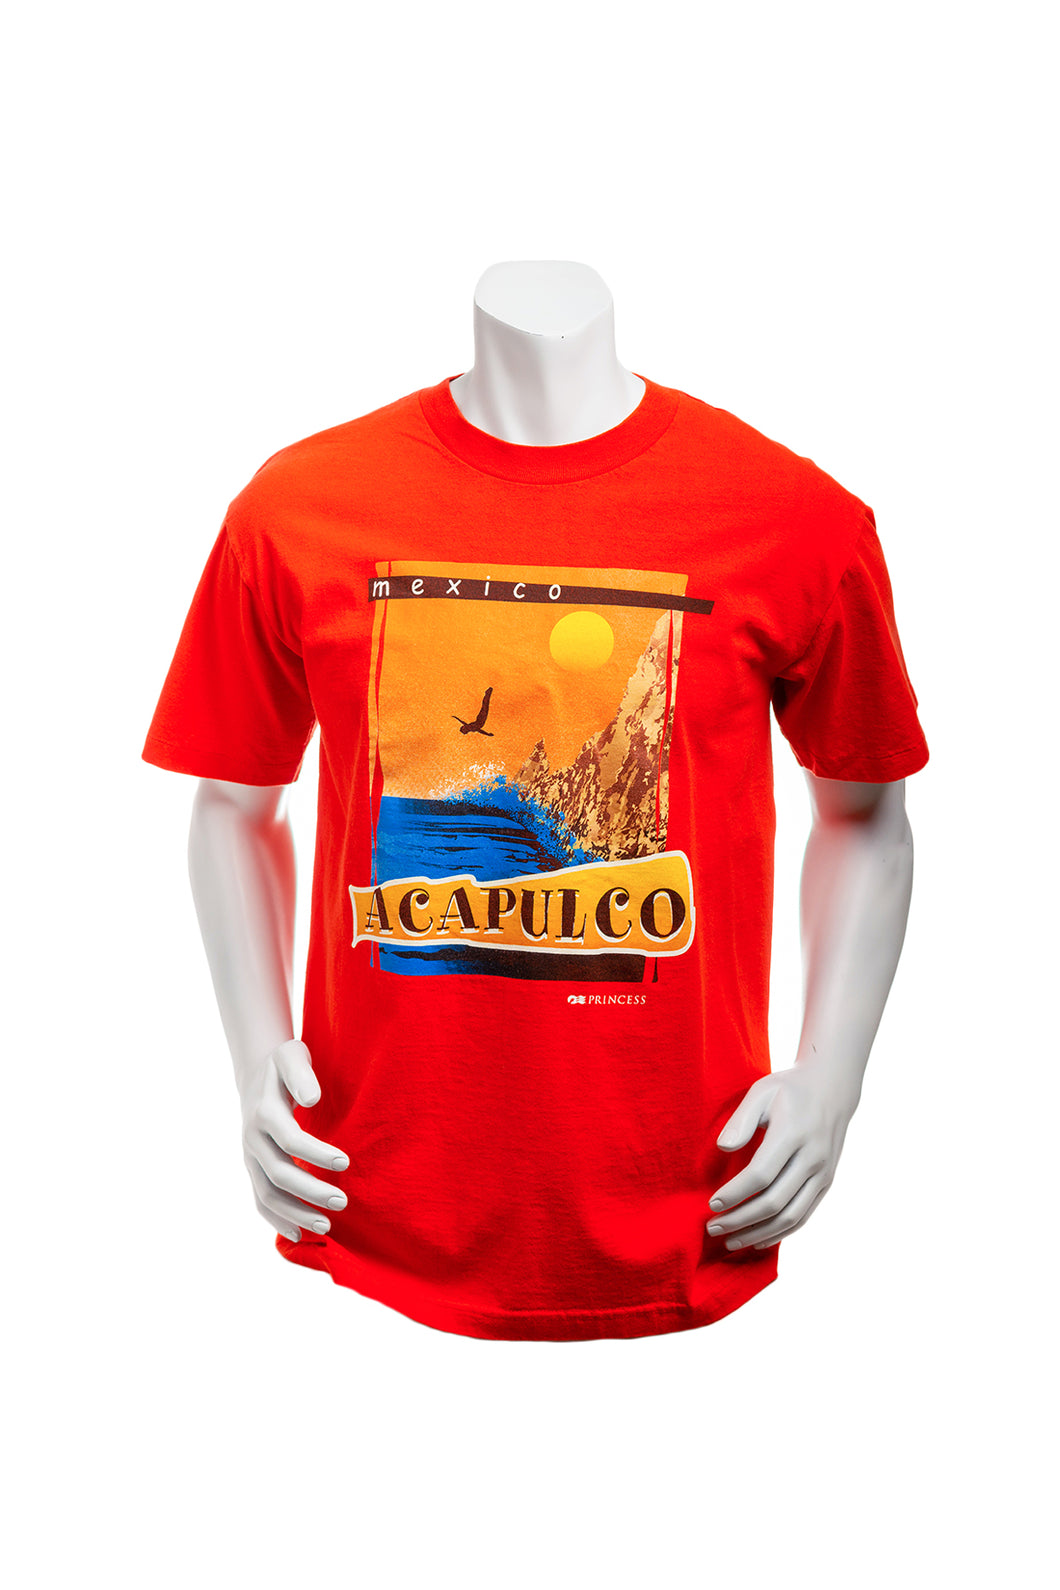 Vintage 90's Acapulco, Mexico Princess Cruise Lines Single Stitch T-Shirt Men's Large